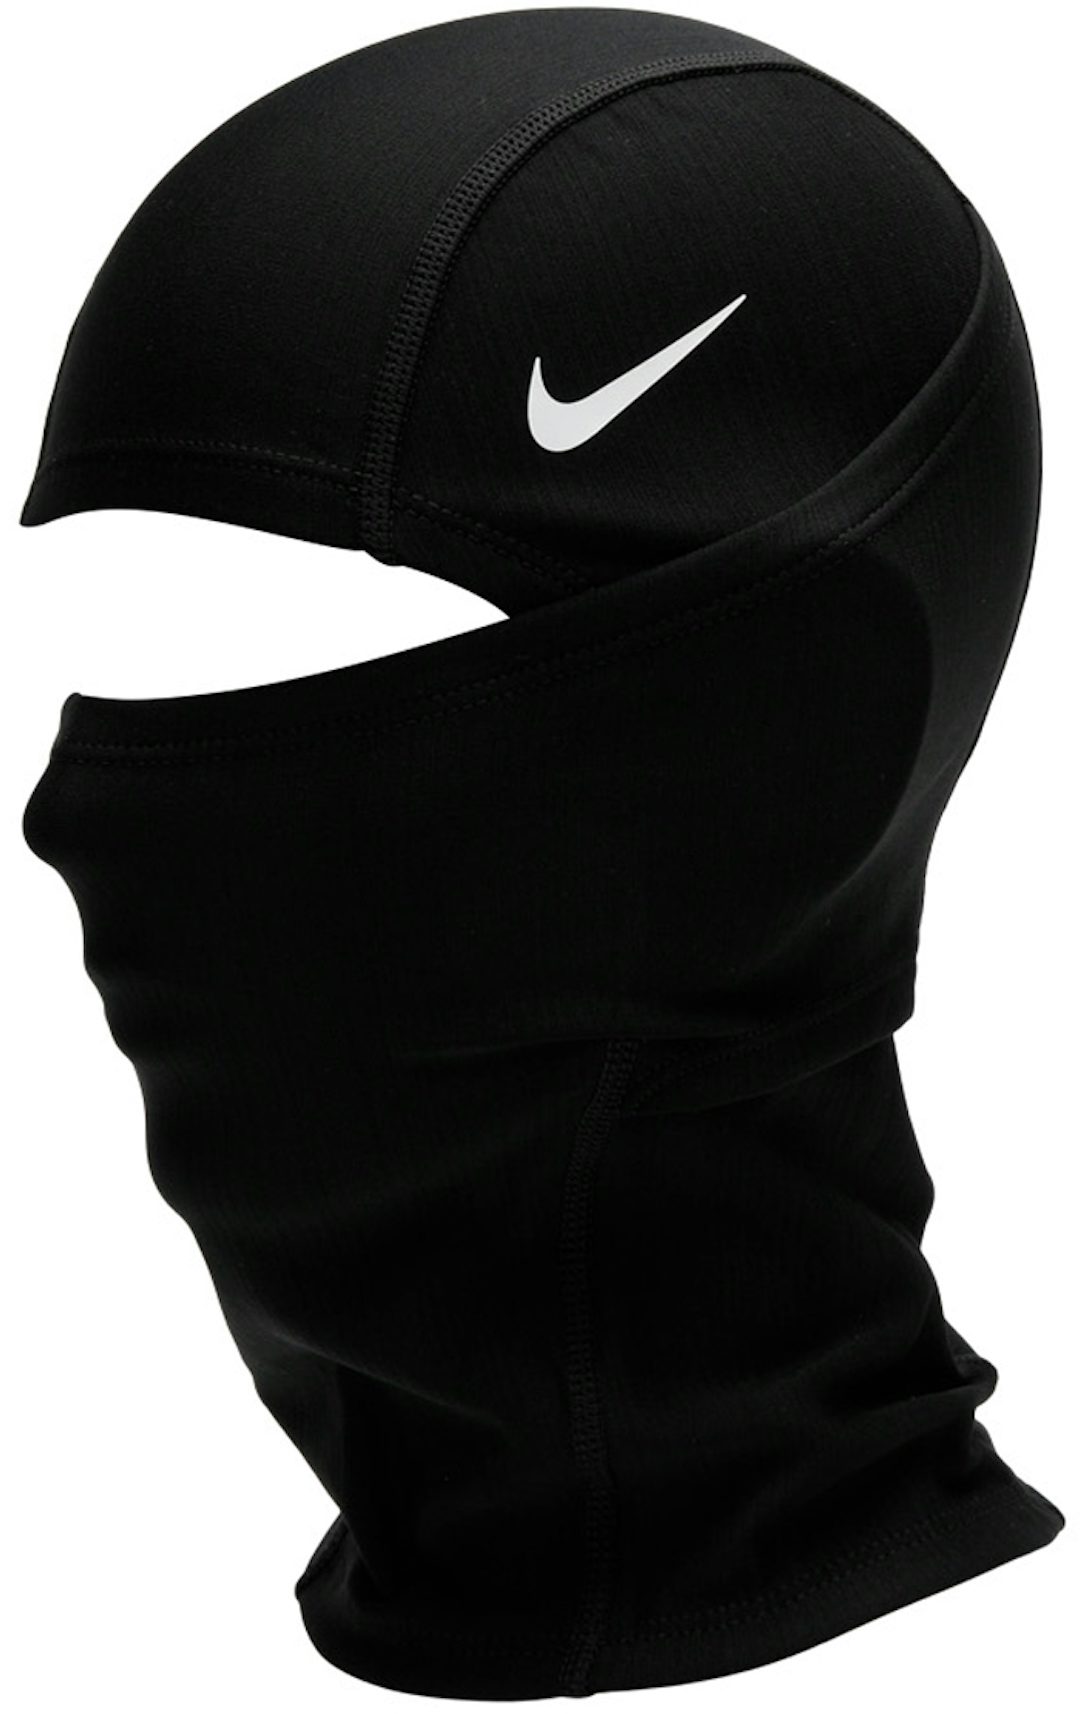 https://images.stockx.com/images/Nike-Pro-Hyperwarm-Hood-Balaclava-Black-Product.jpg?fit=fill&bg=FFFFFF&w=1200&h=857&fm=jpg&auto=compress&dpr=2&trim=color&updated_at=1665063932&q=60